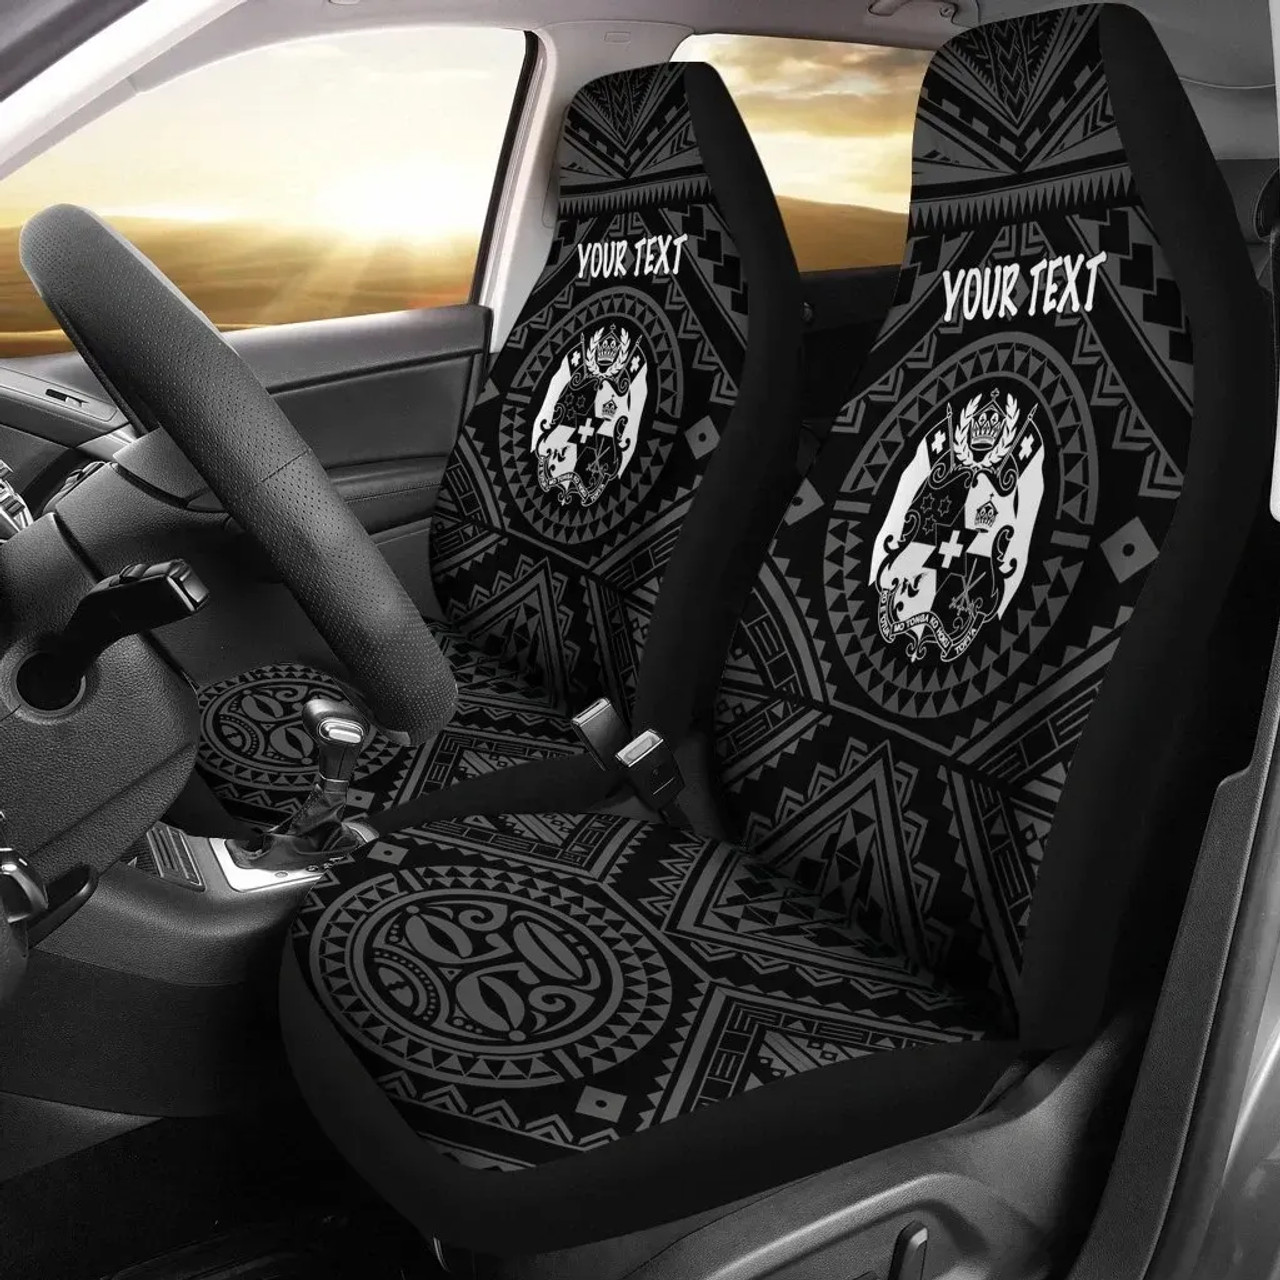 Tonga Personalised Car Seat Covers - Tonga Seal With Polynesian Tattoo Style (Black)